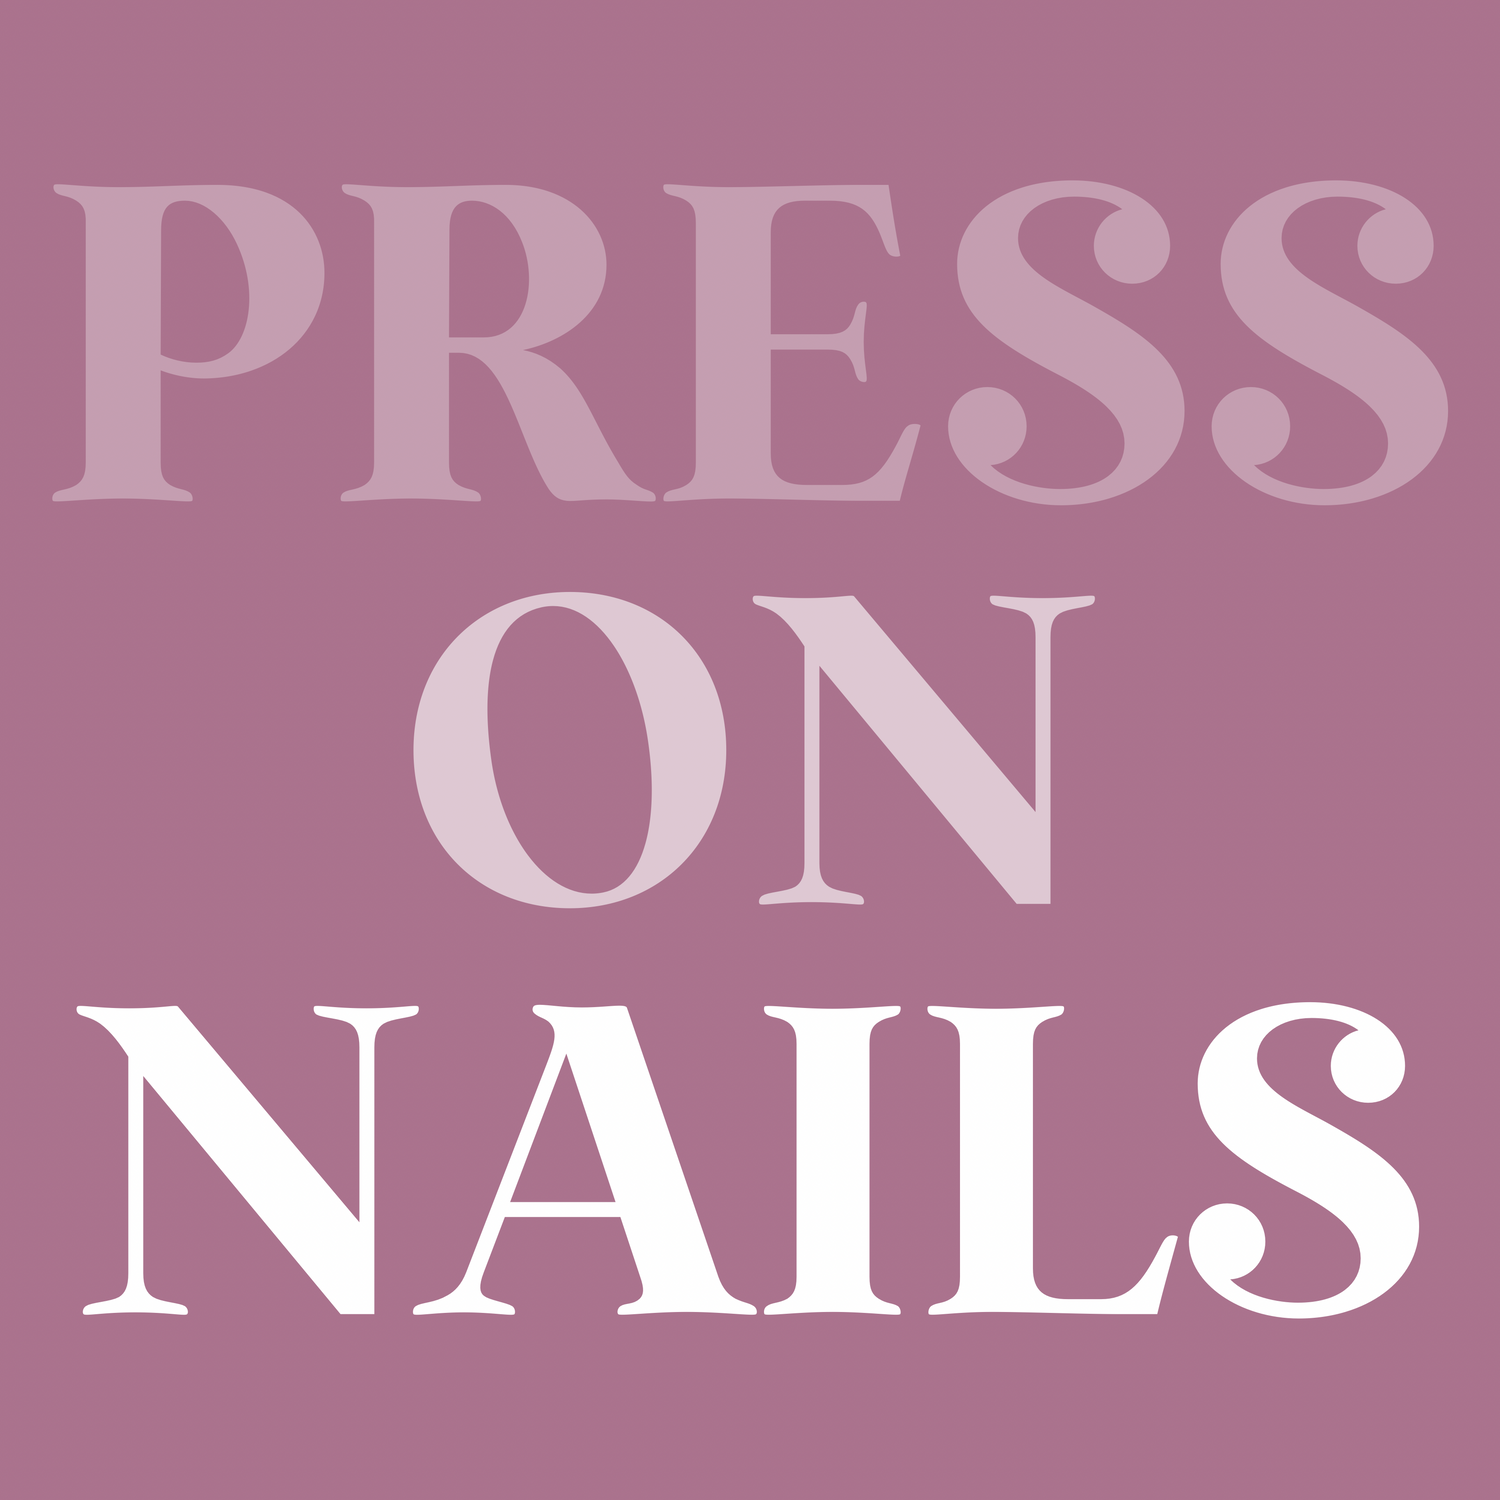 Press - On Nails